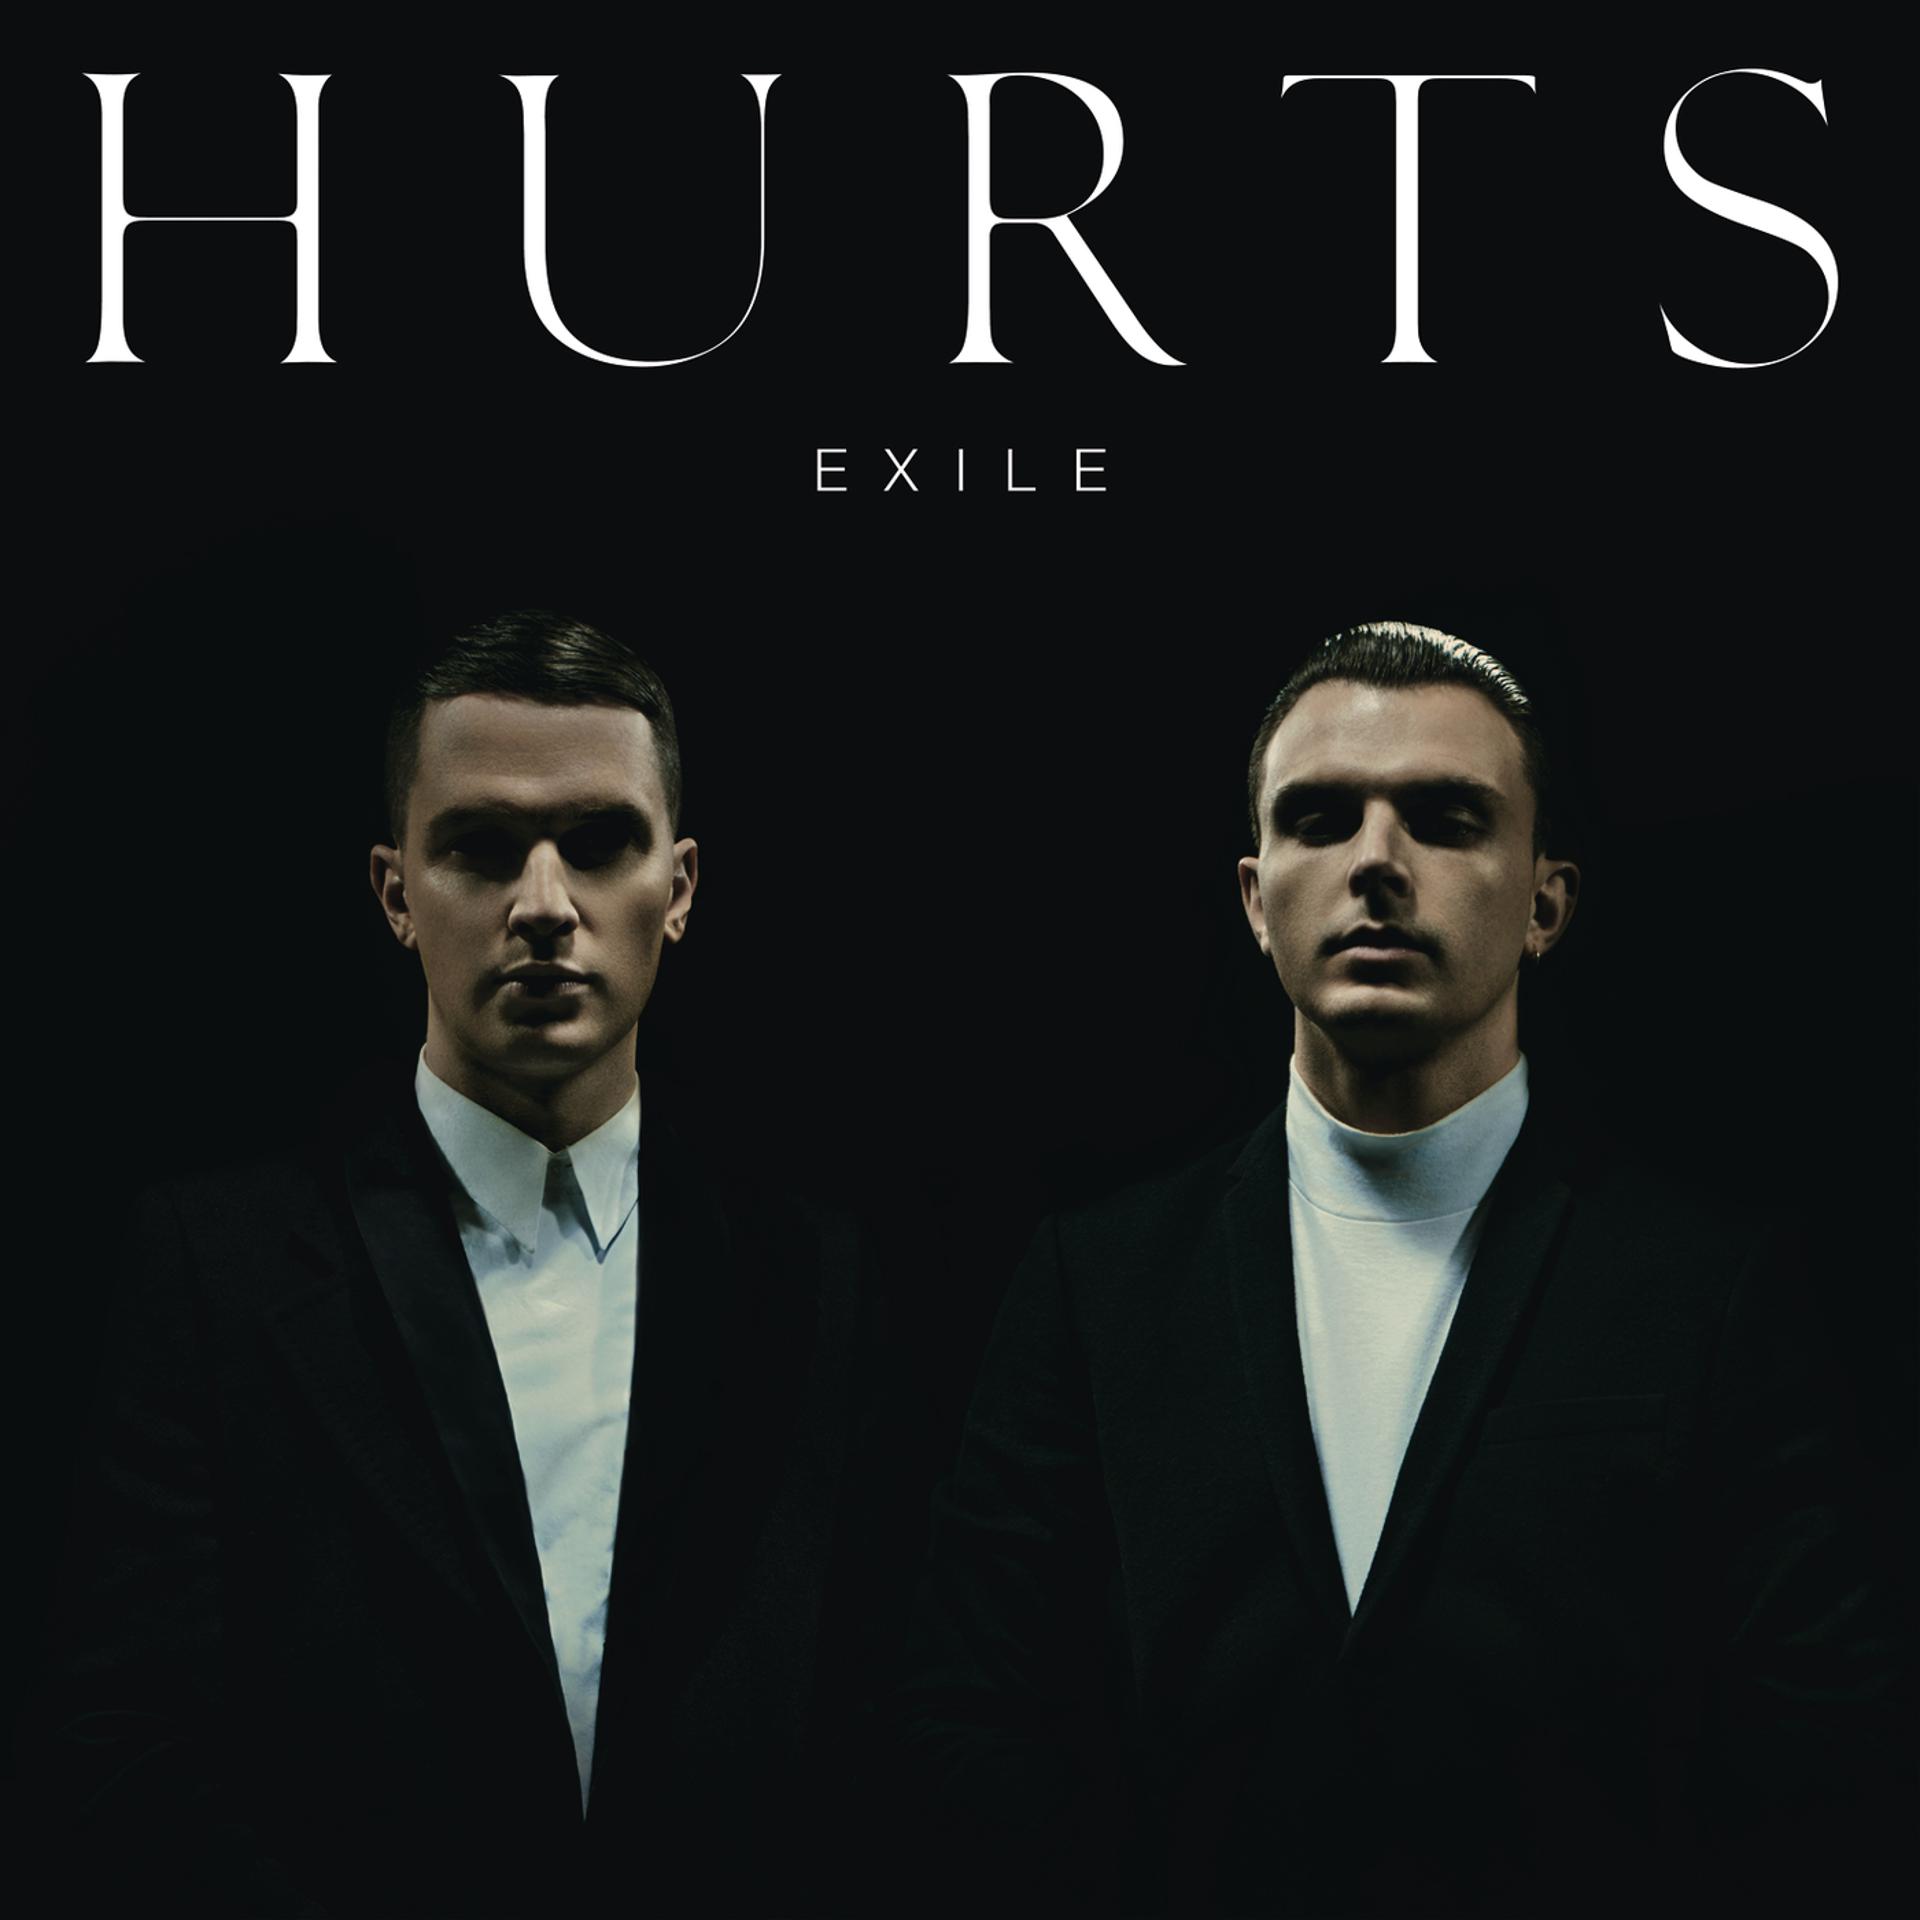 Hurts won. Hurts обложки альбомов. Hurts 2013 Exile. Концерт hurts 2023. Группа hurts альбомы.